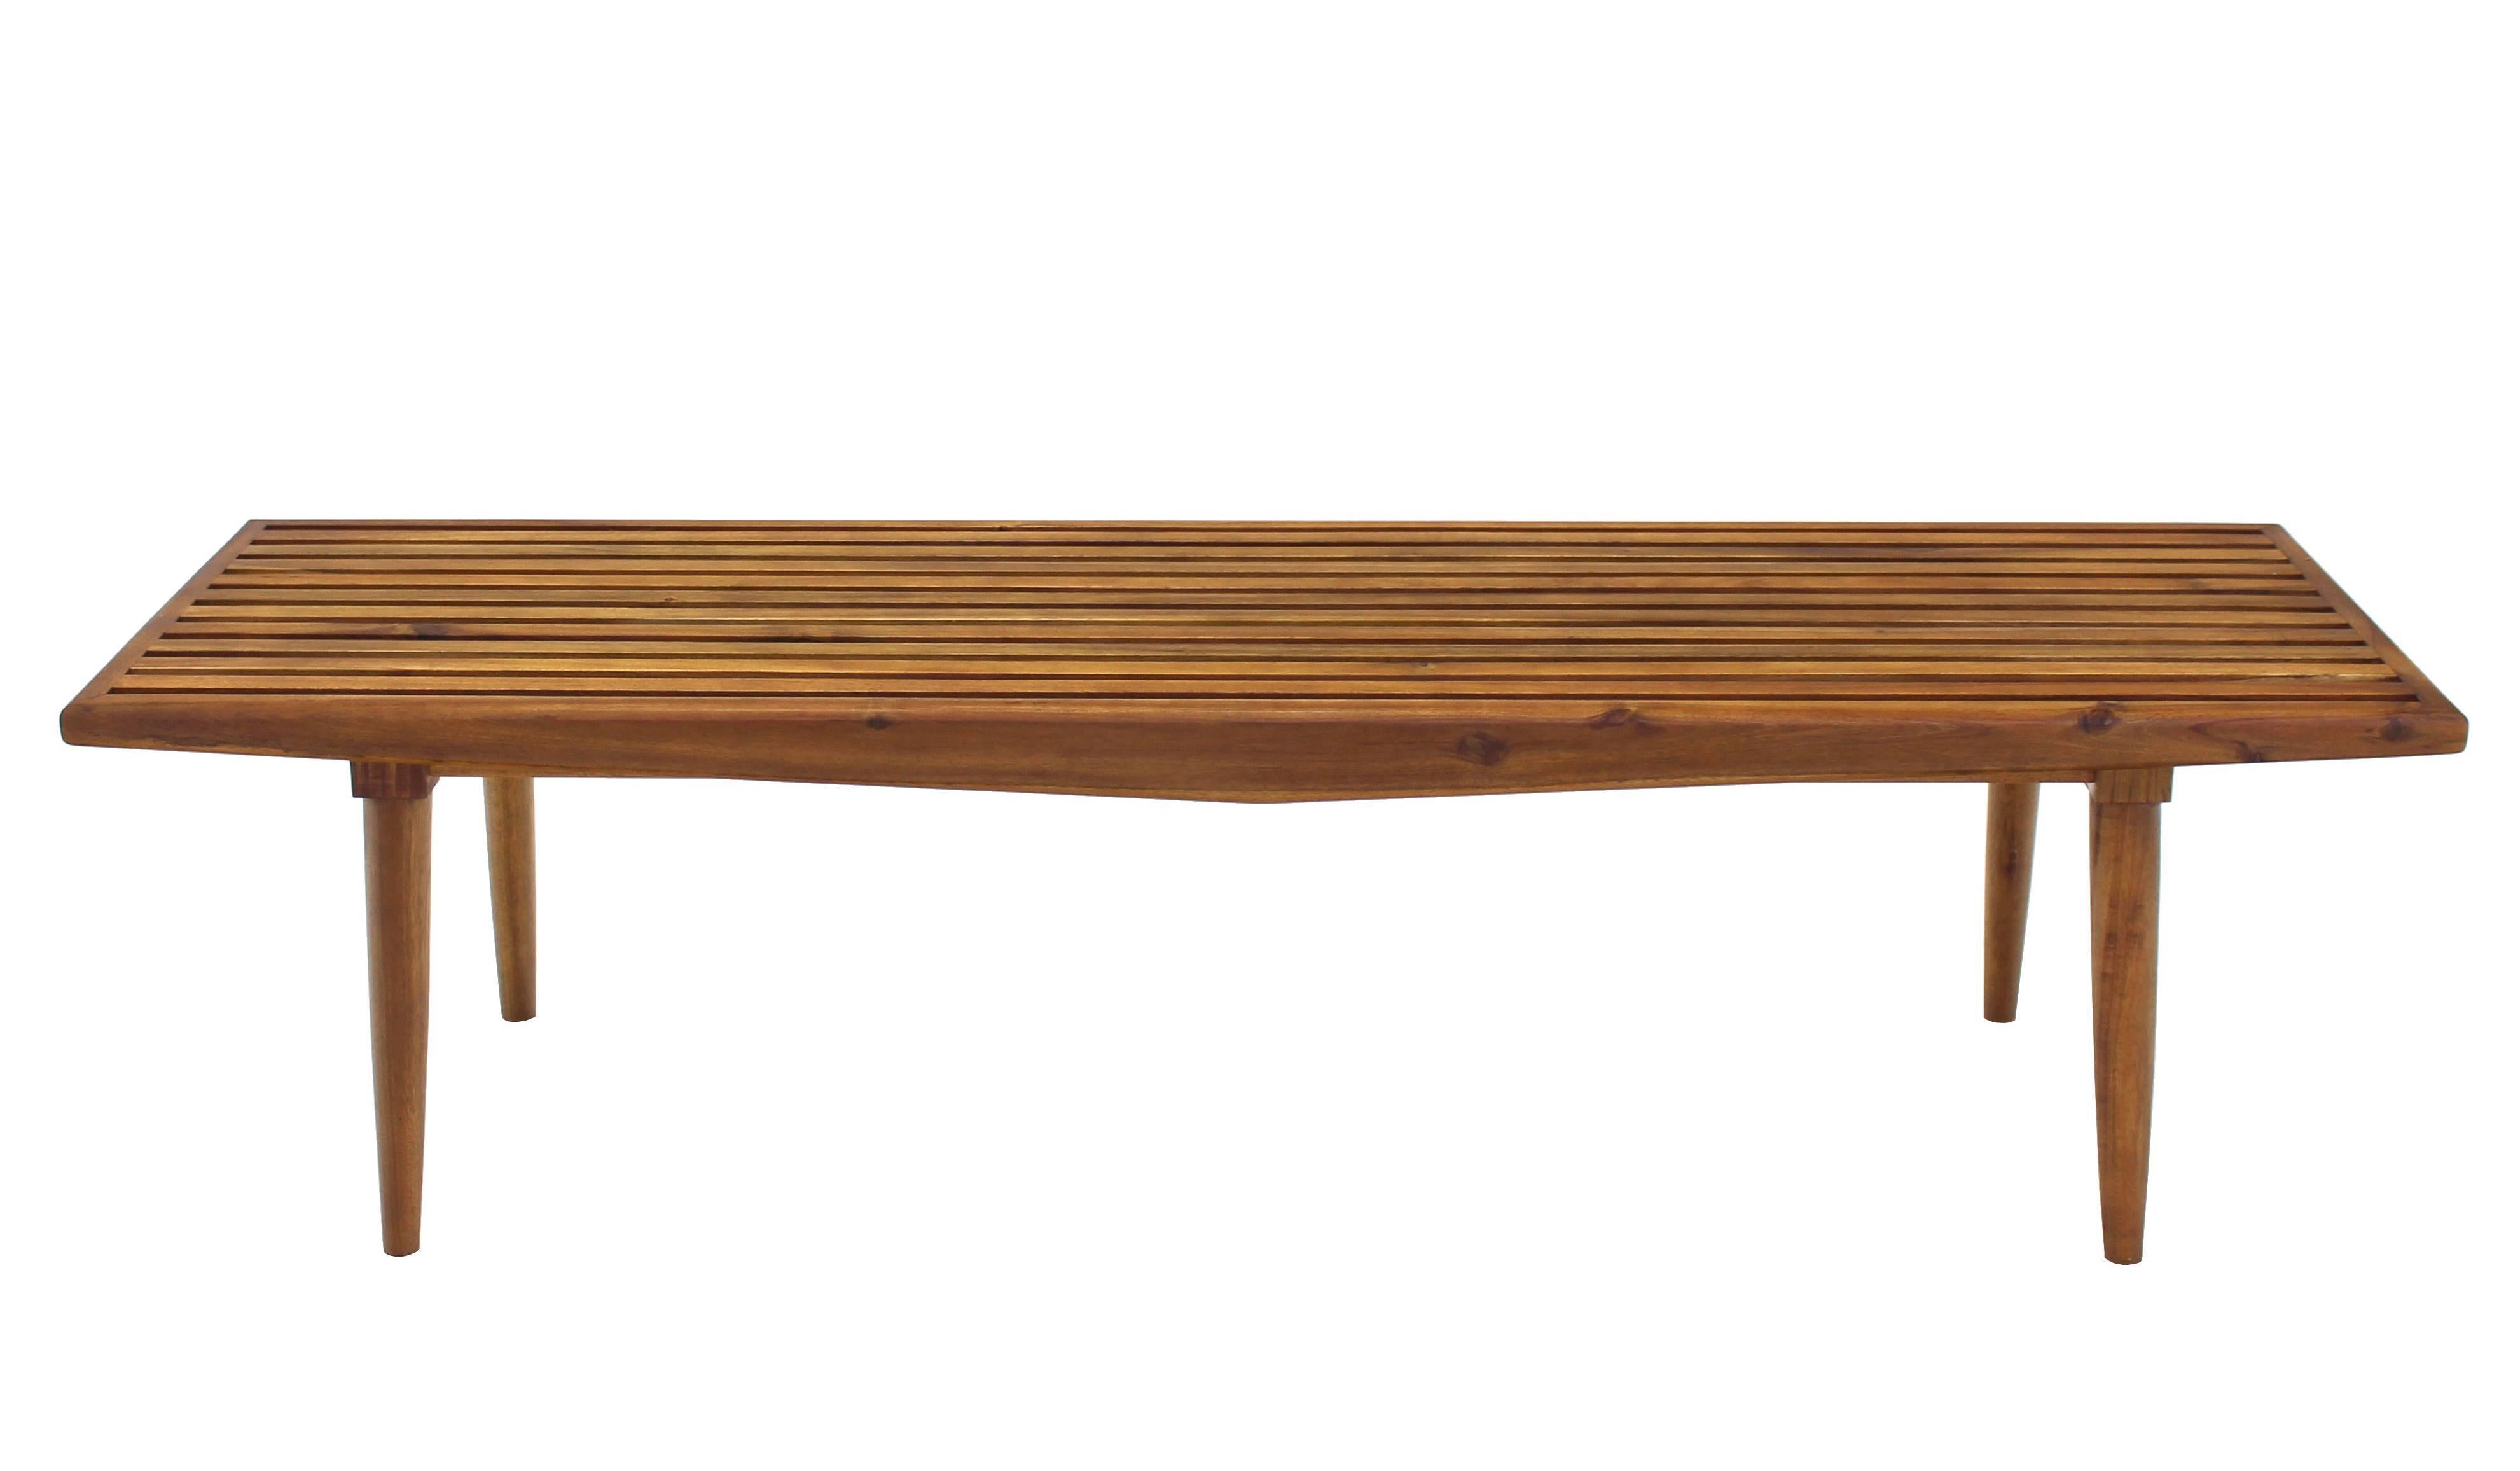 Established lines midcentury Danish modern decor oiled walnut finish solid acacia slat bench or coffee table.